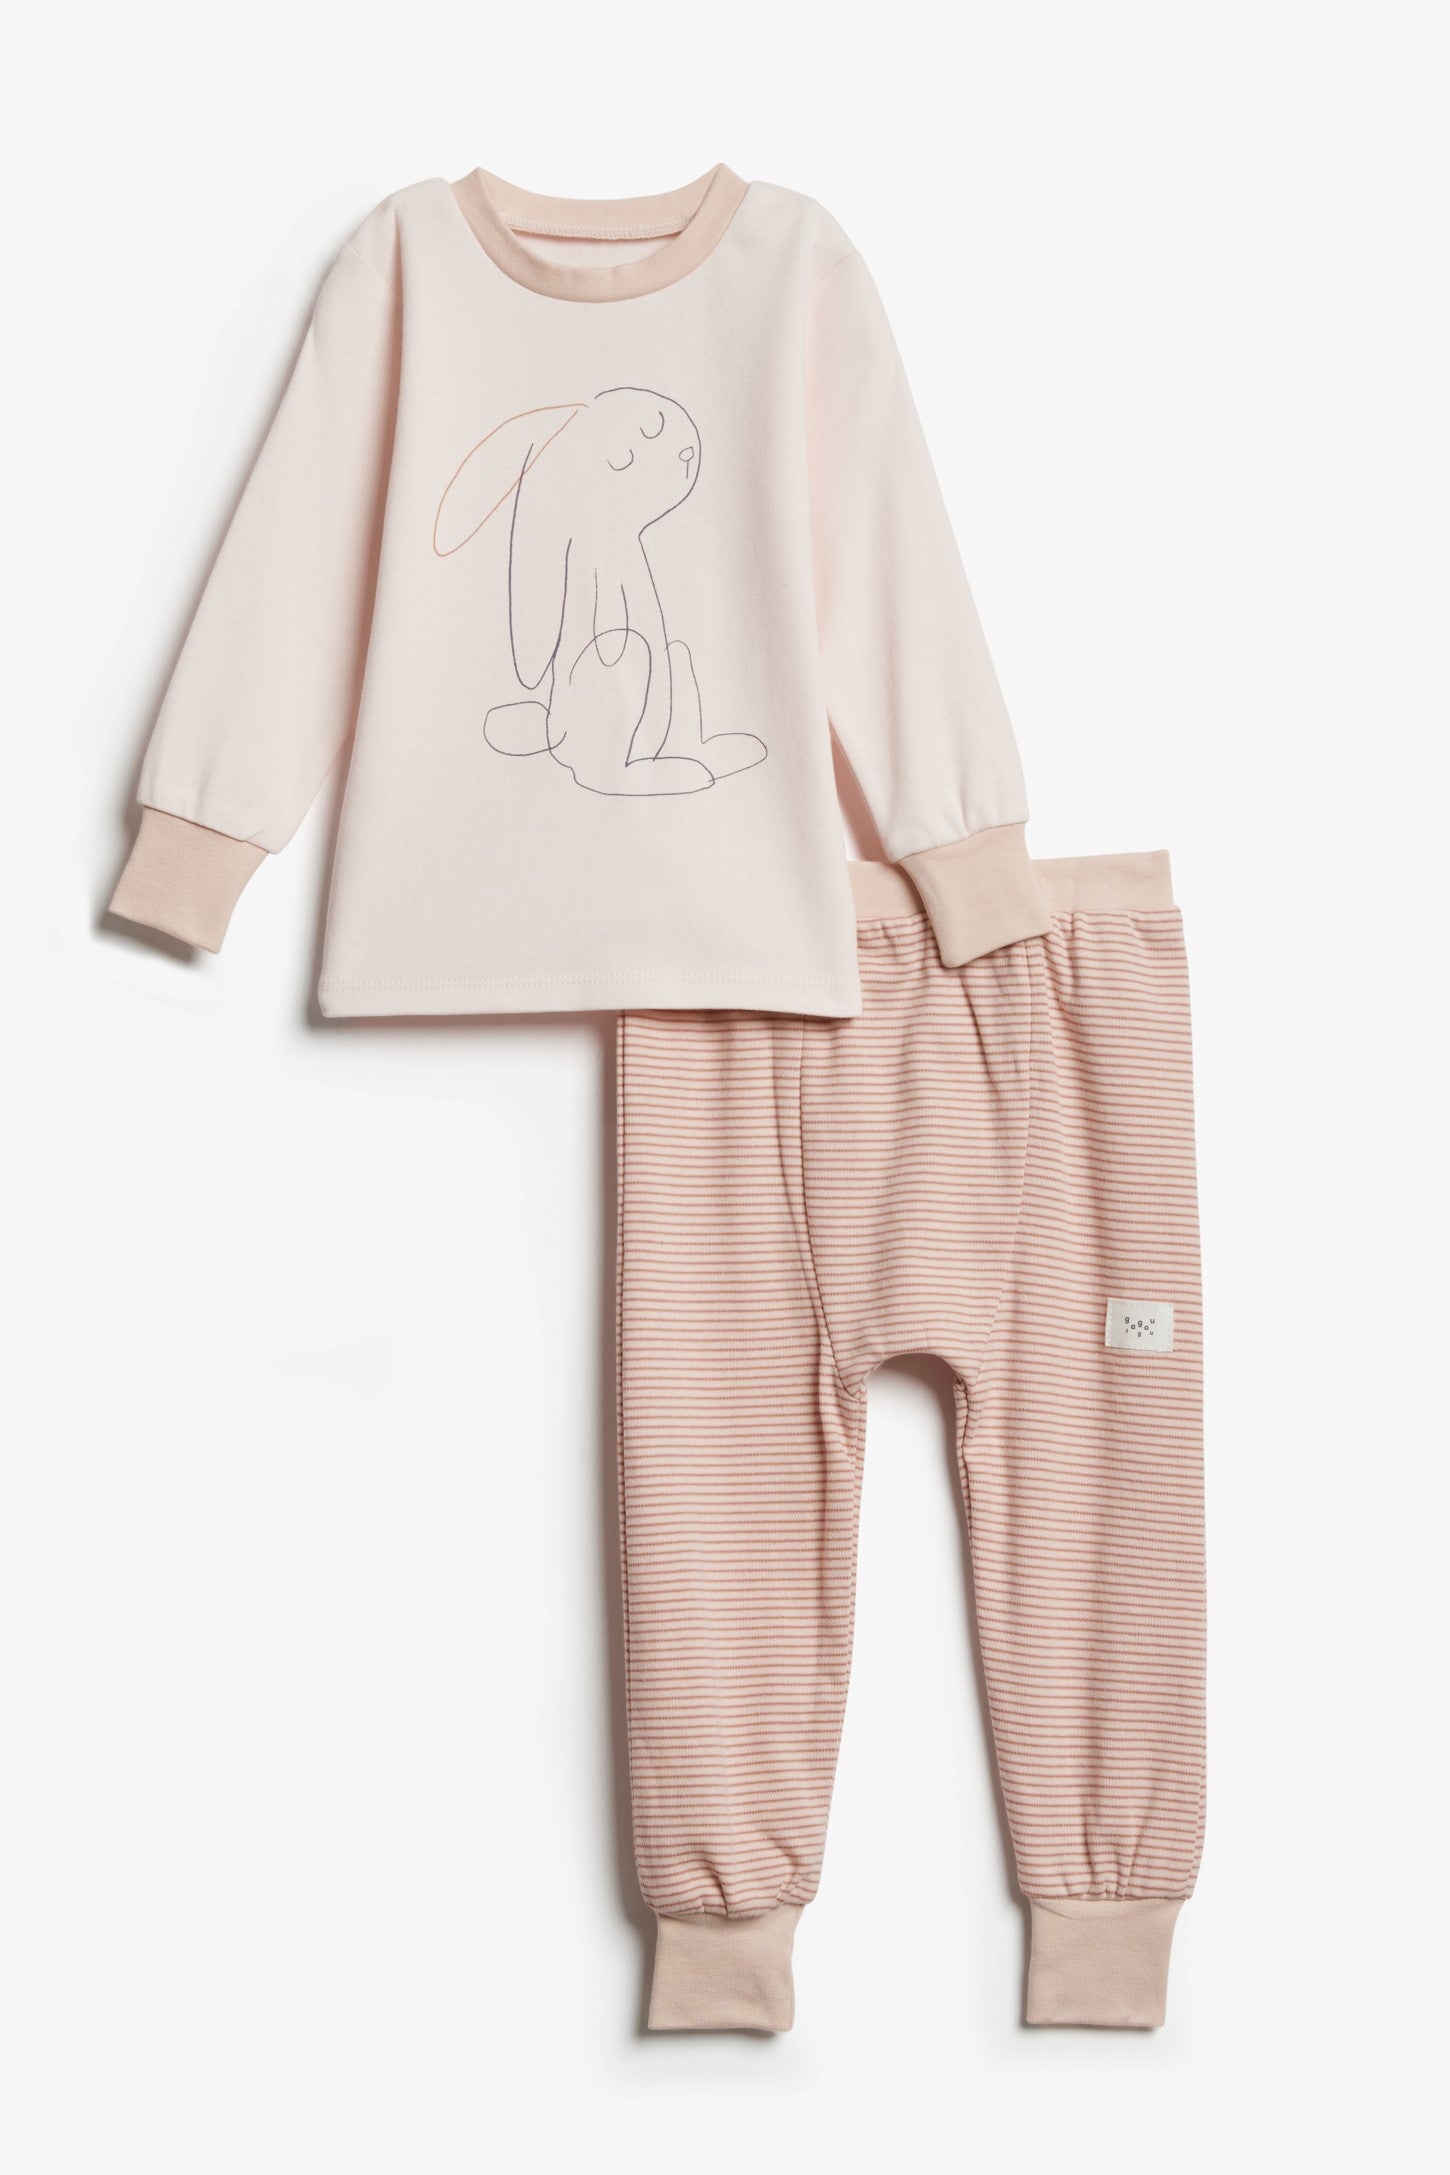 Pyjama 2-pièces imprimé, coton bio, 2/30$ - Bébé && ROSE